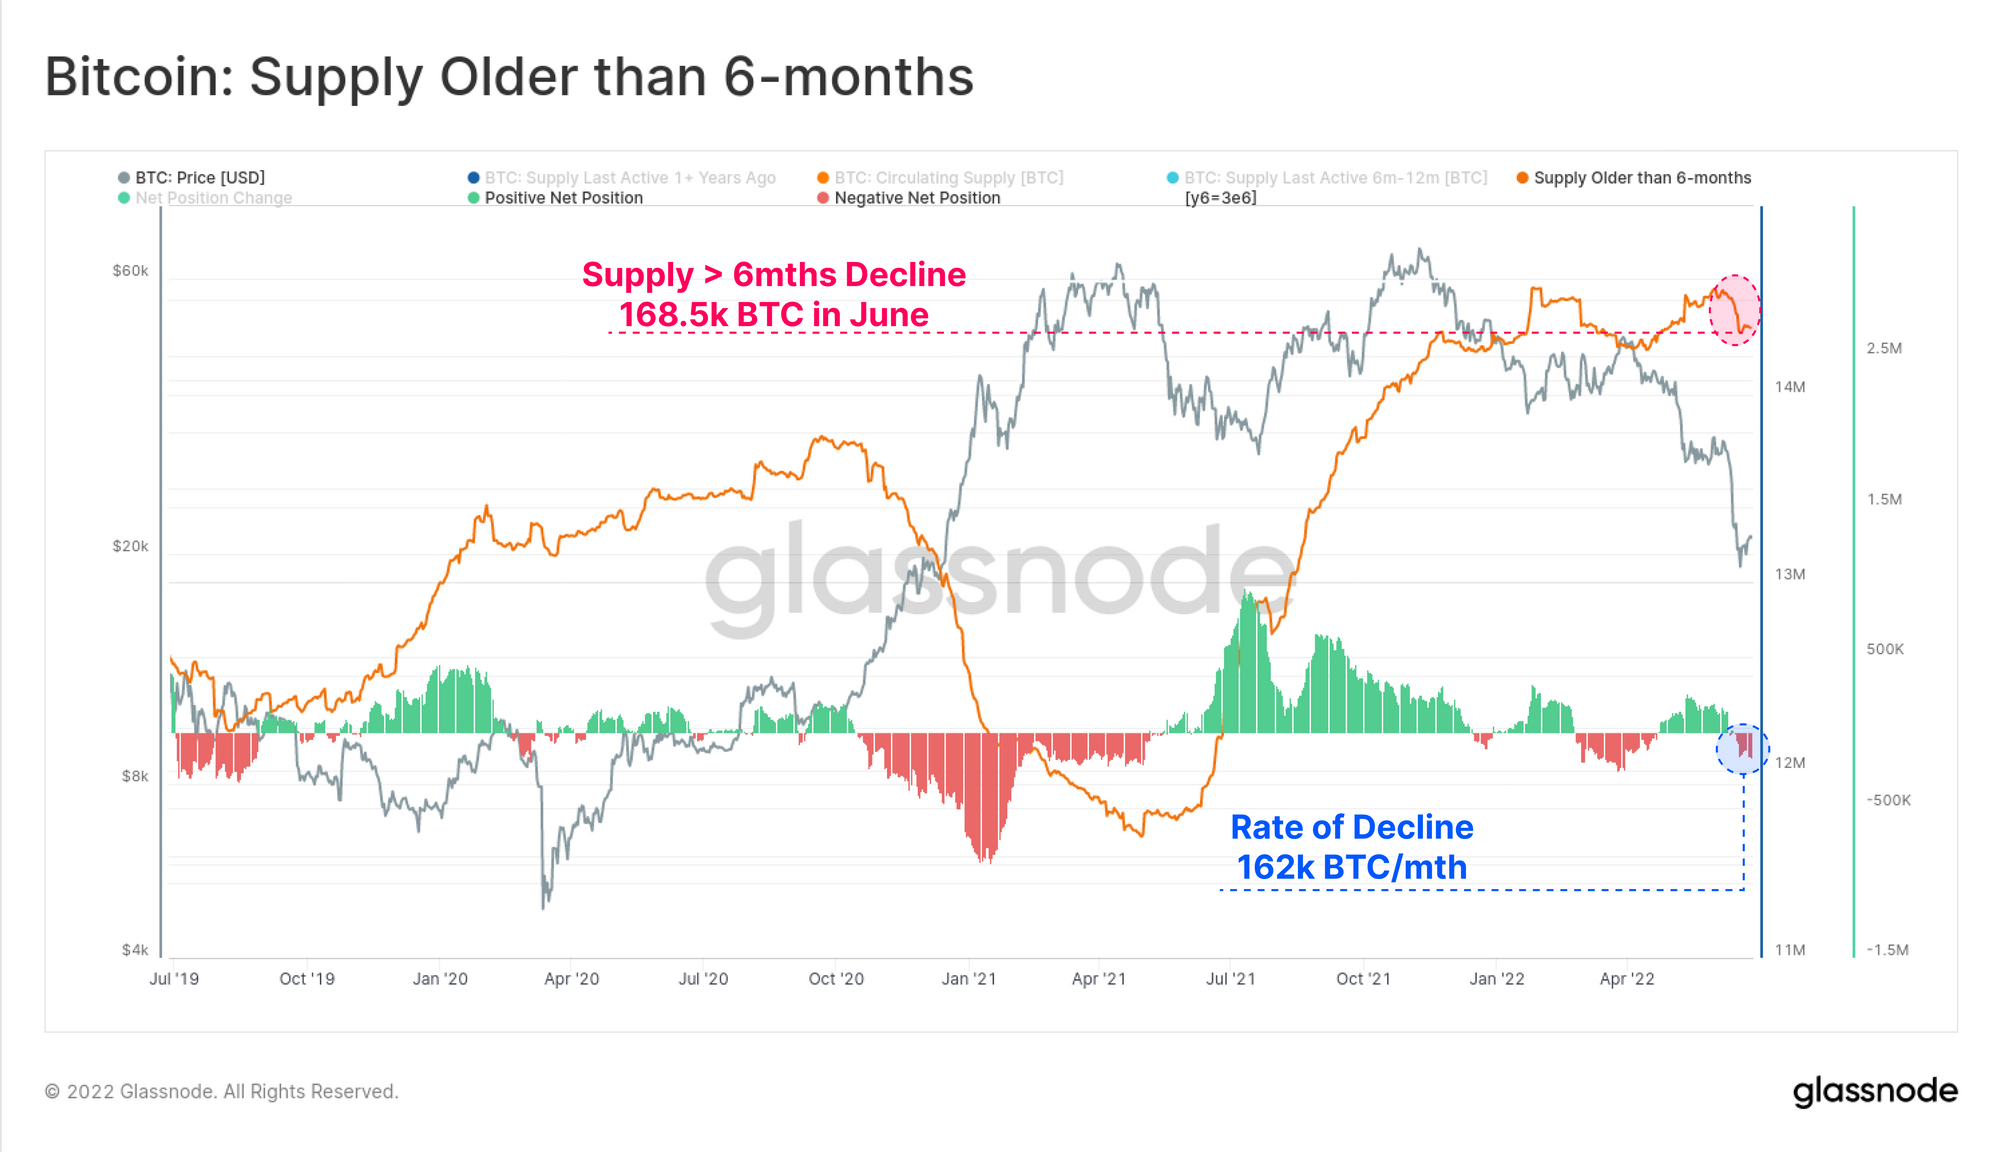 Bitcoin: Supply Older than 6-months